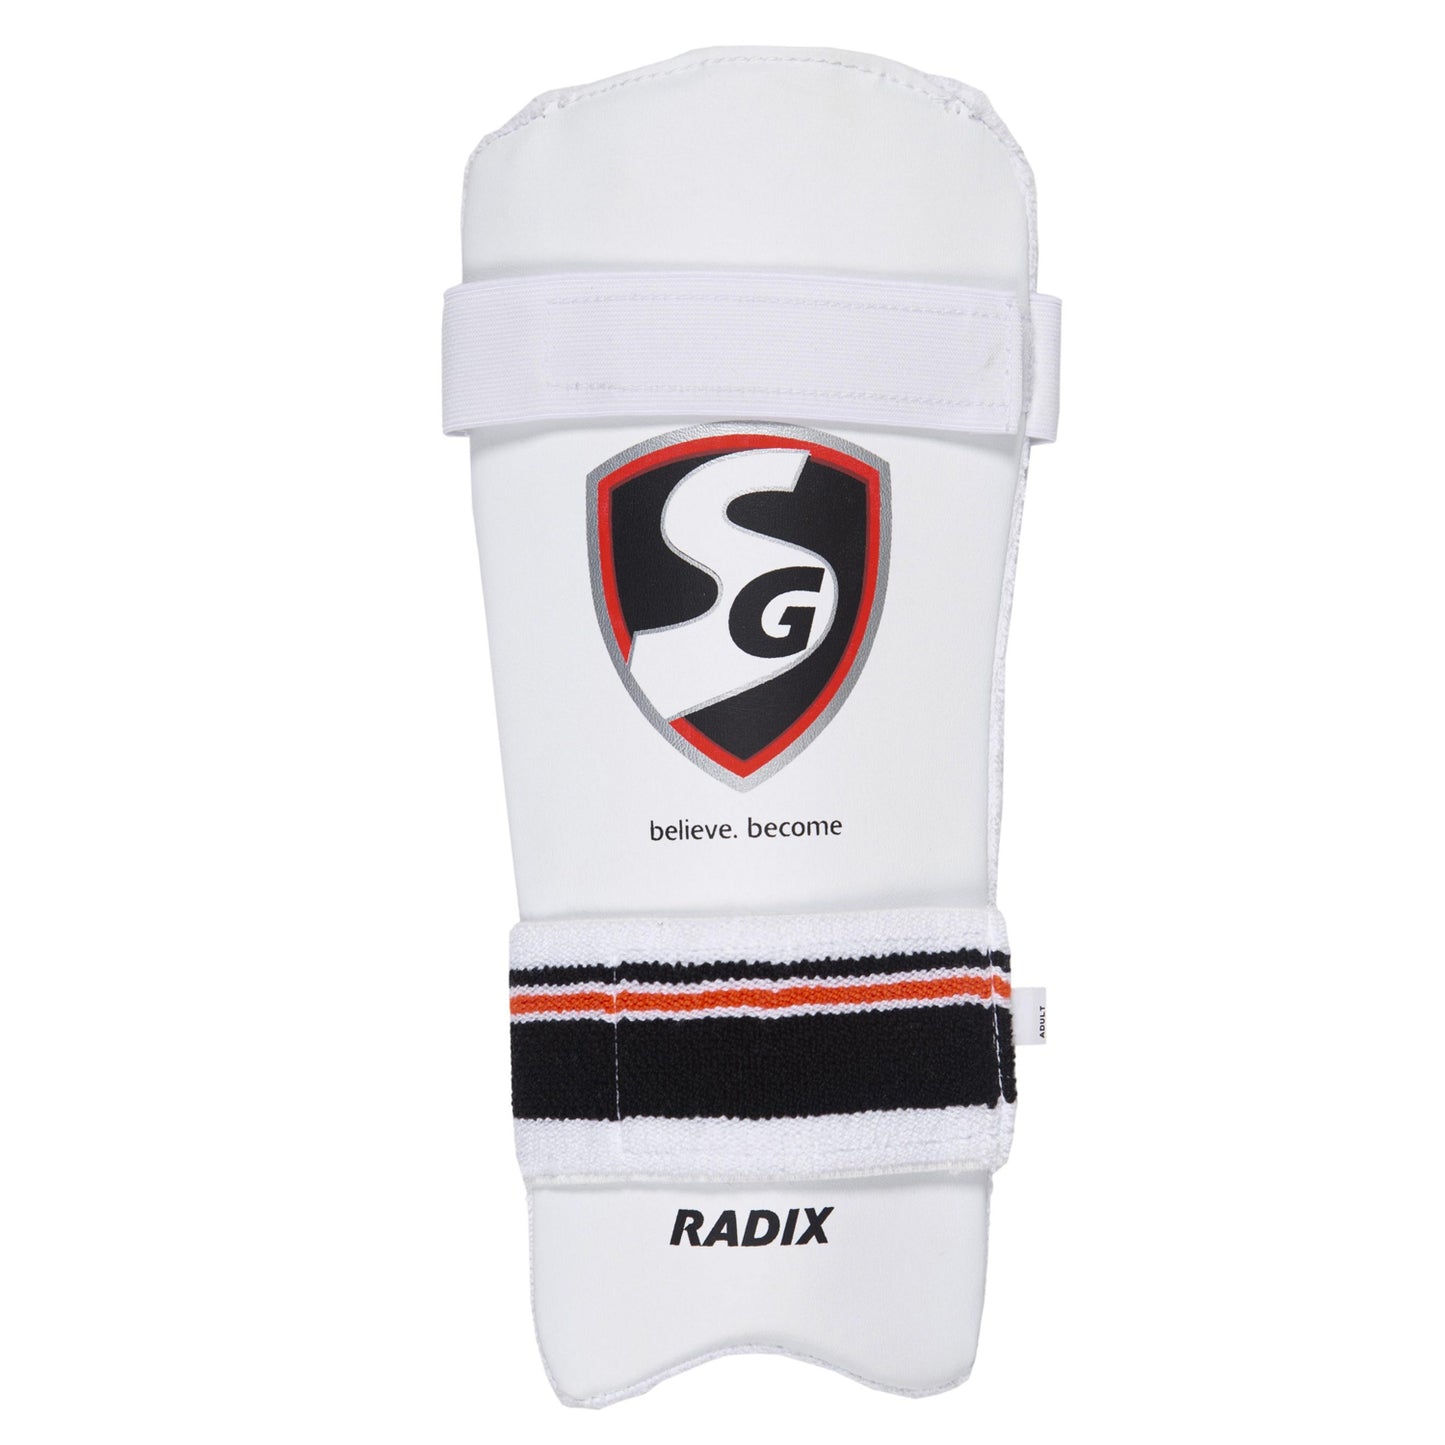 SG Radix Elbow Guards - Best Price online Prokicksports.com